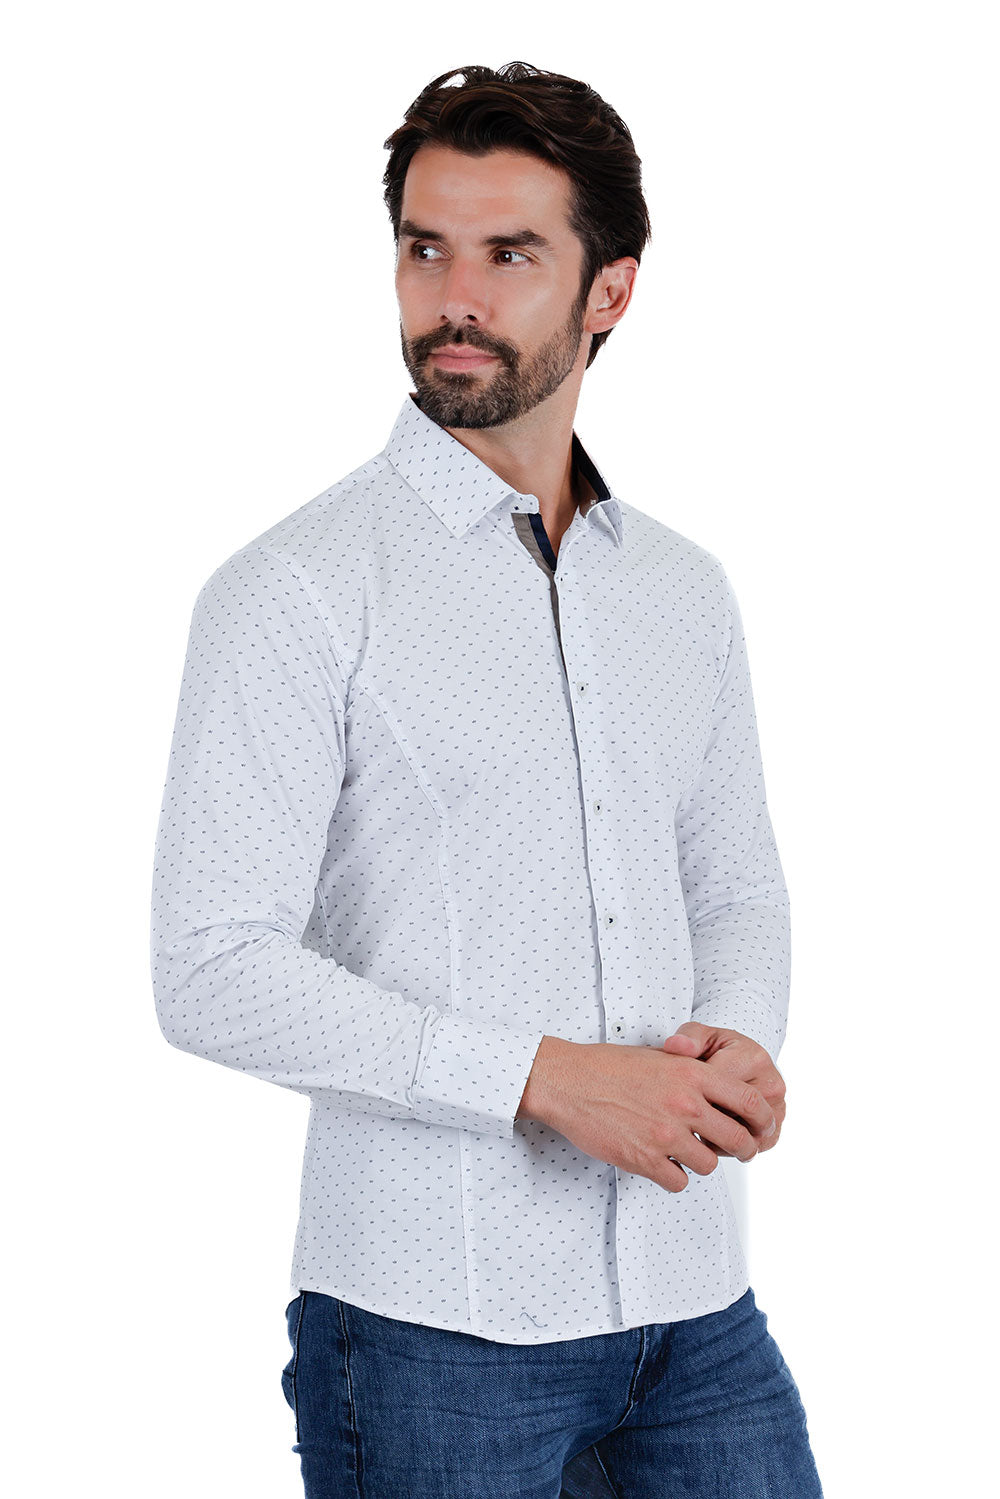 BARABAS Men's Solid Color Polka Dot Print Long Sleeve Shirts 3B358 White